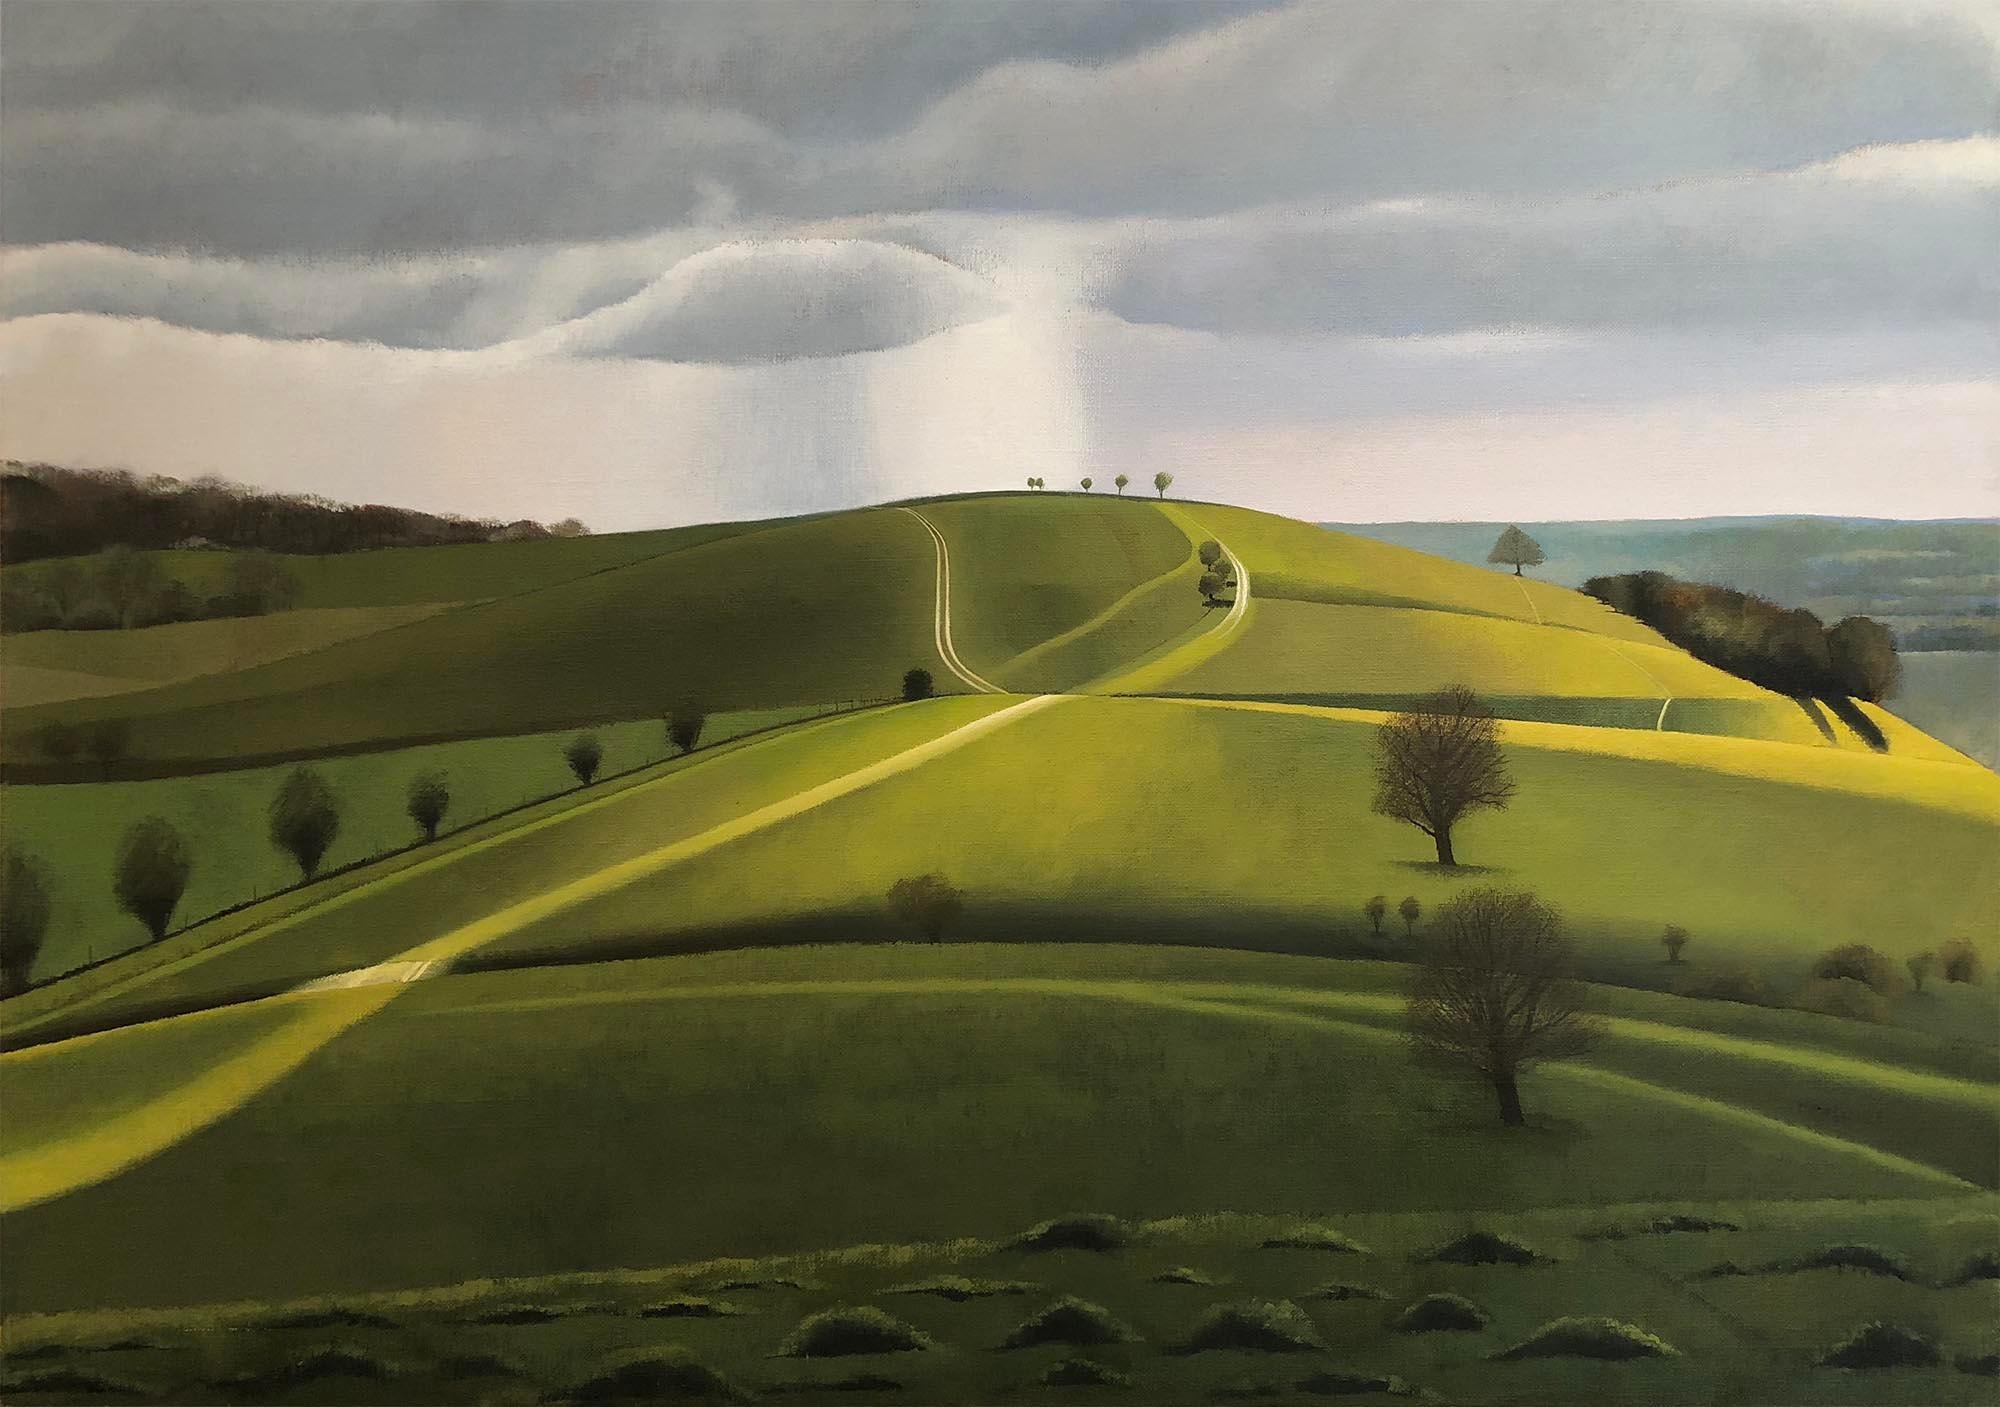 Tim Woodcock-Jones Landscape Painting - Near Pitstone Hill, realism, oil painting, landscape painting